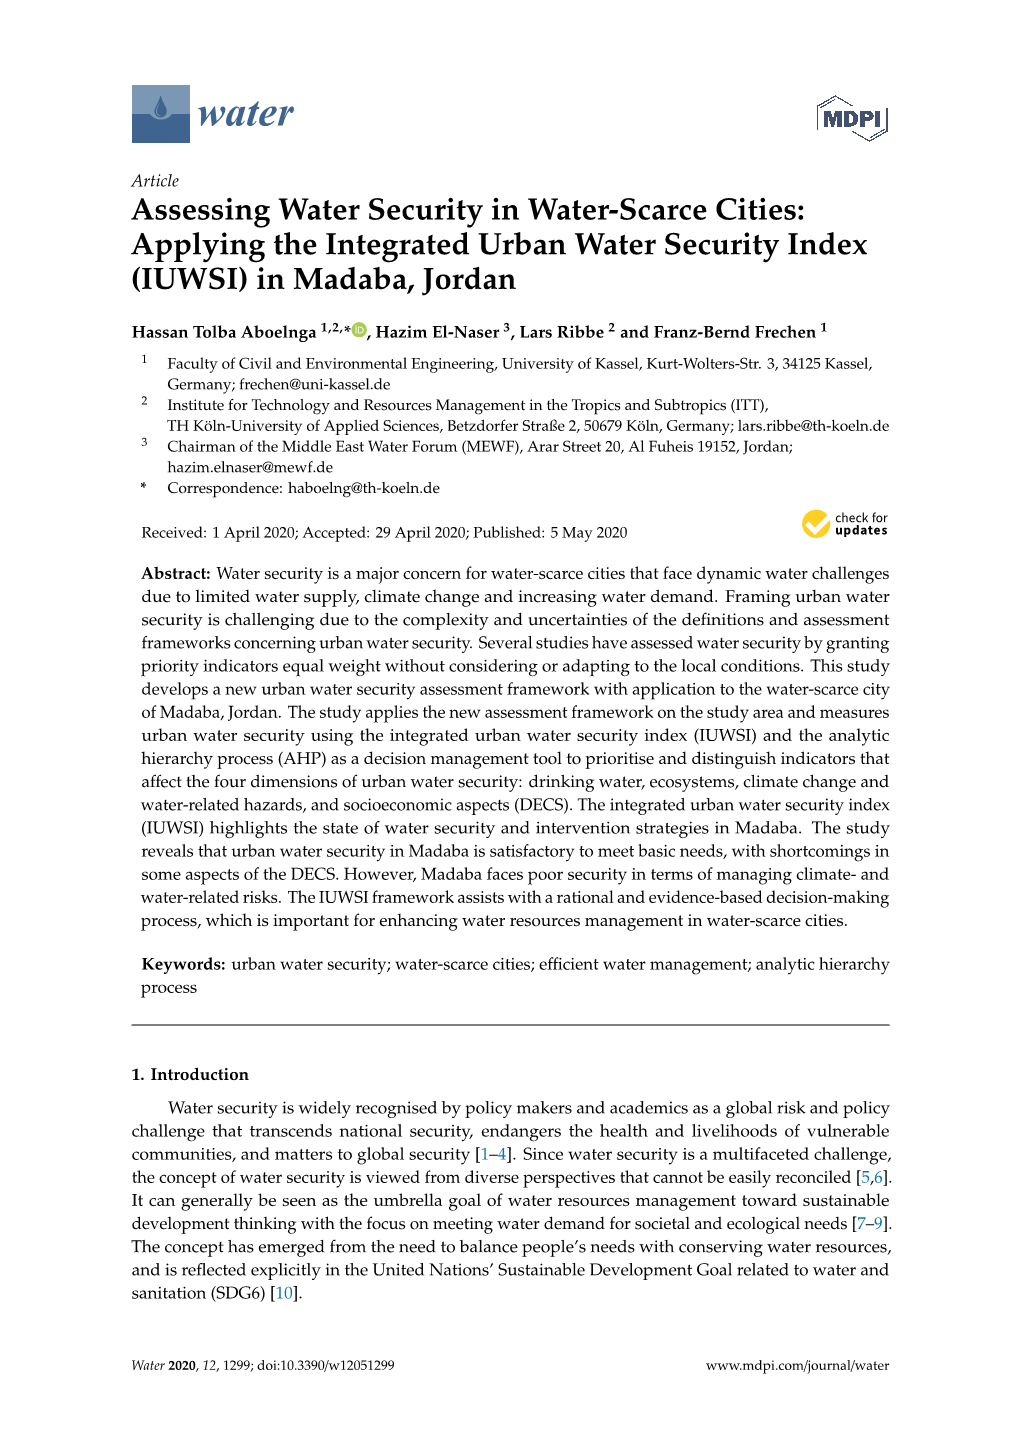 Applying the Integrated Urban Water Security Index (IUWSI) in Madaba, Jordan